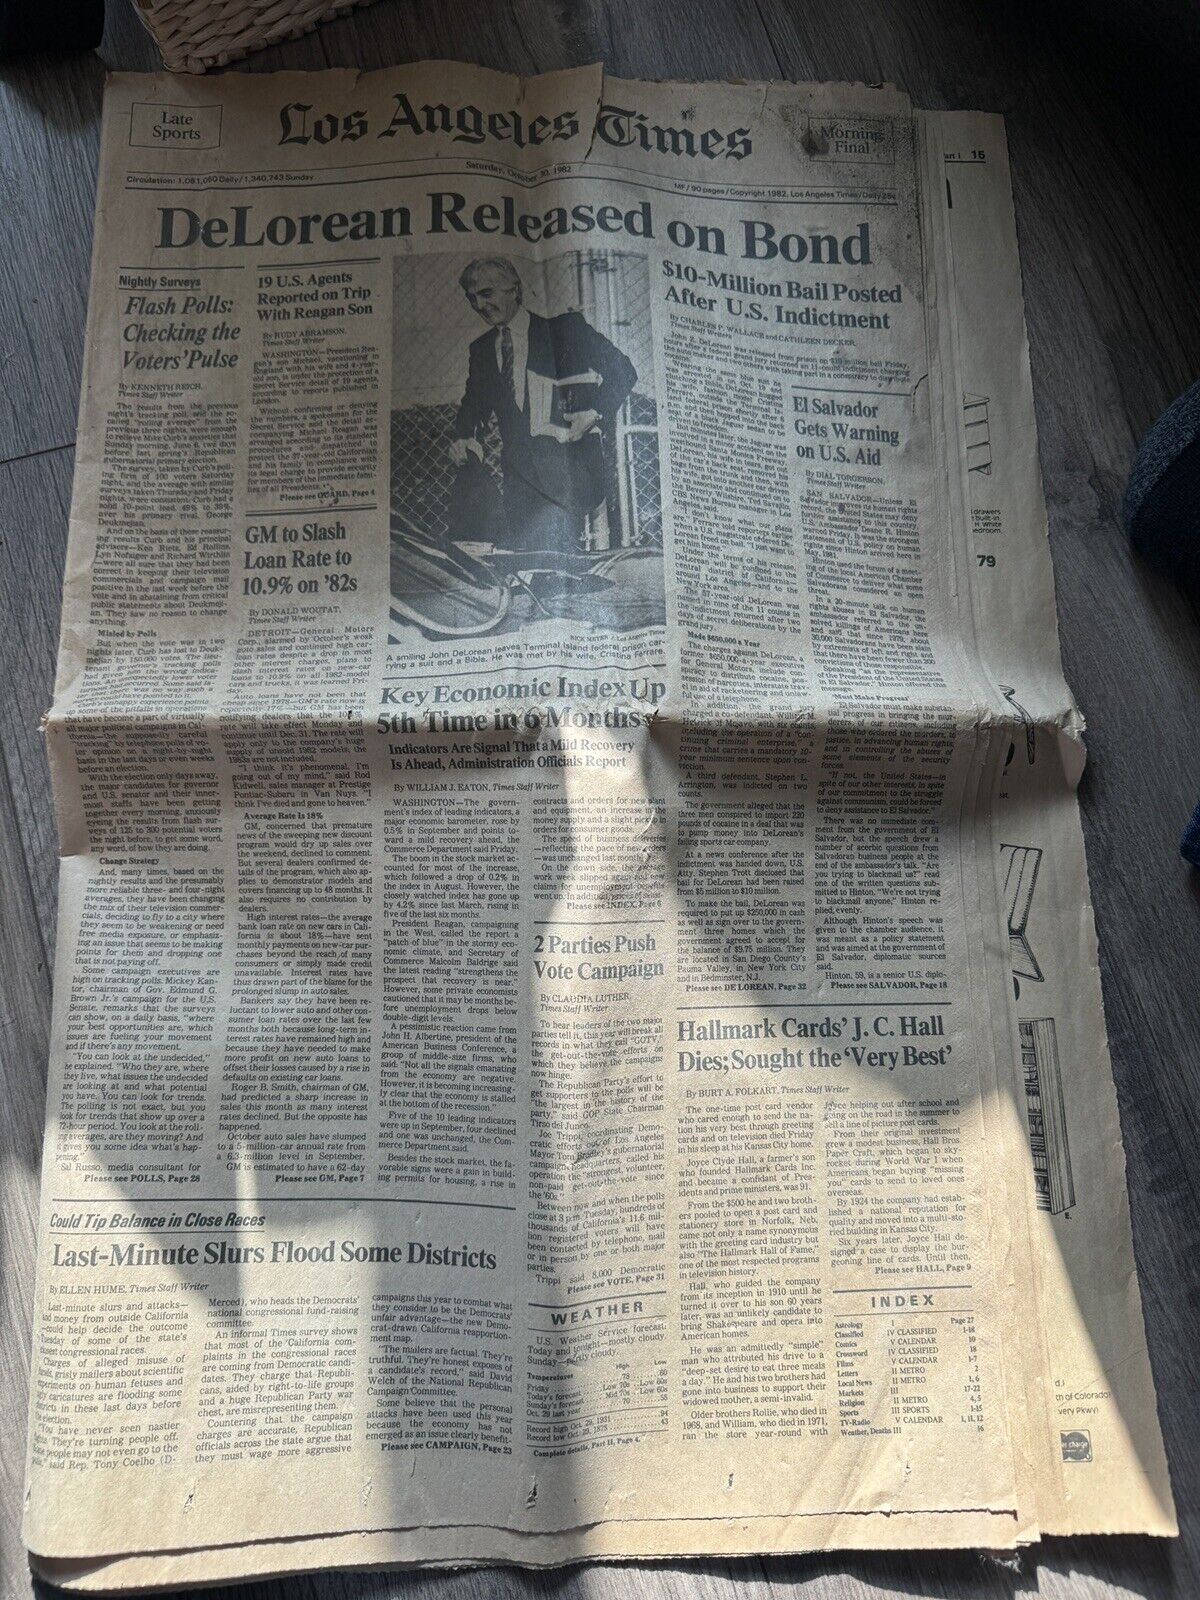 los angeles times newspaper October 30 1982 DeLorean